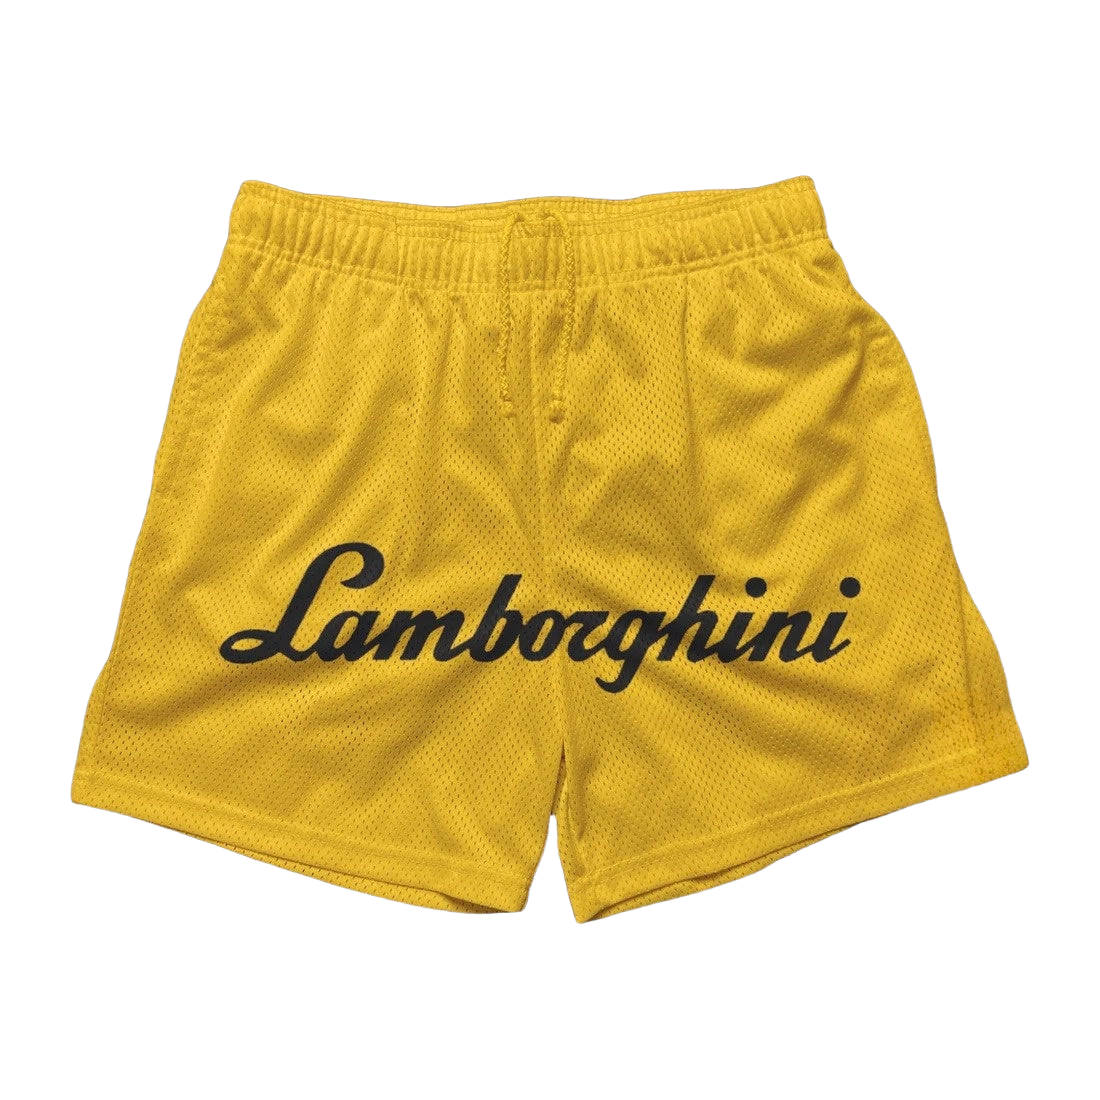 a yellow shorts with the word lambooshini printed on it